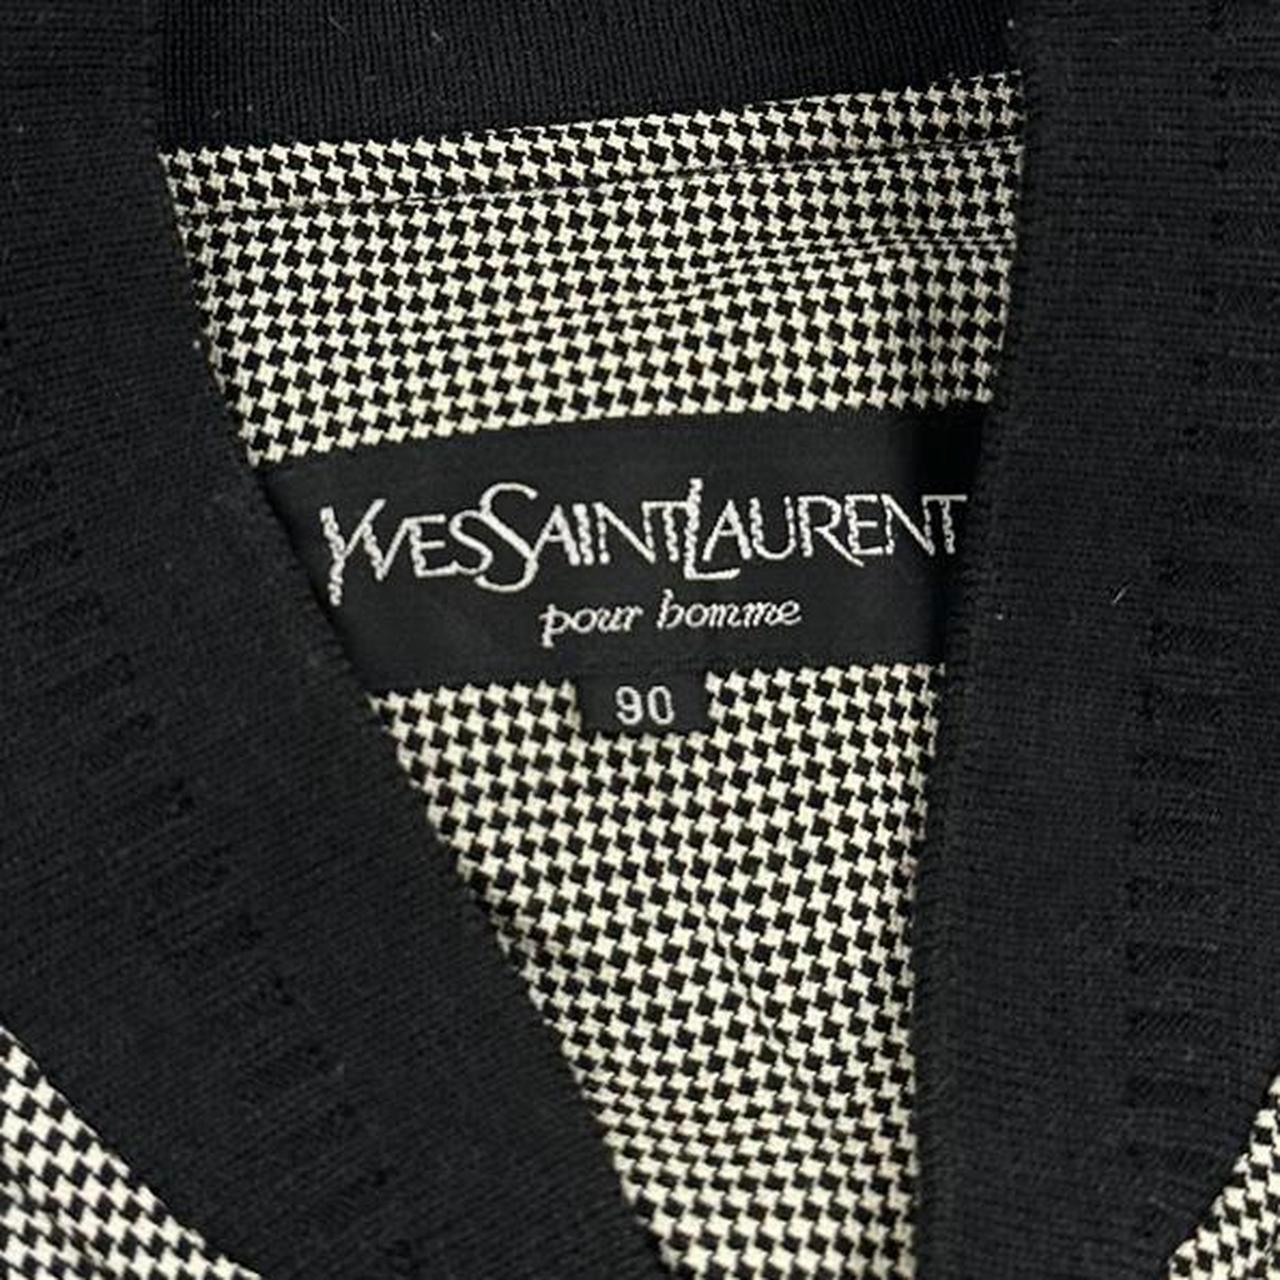 Vintage YSL Yves Saint Laurent checked Harrington jacket size S - Known Source